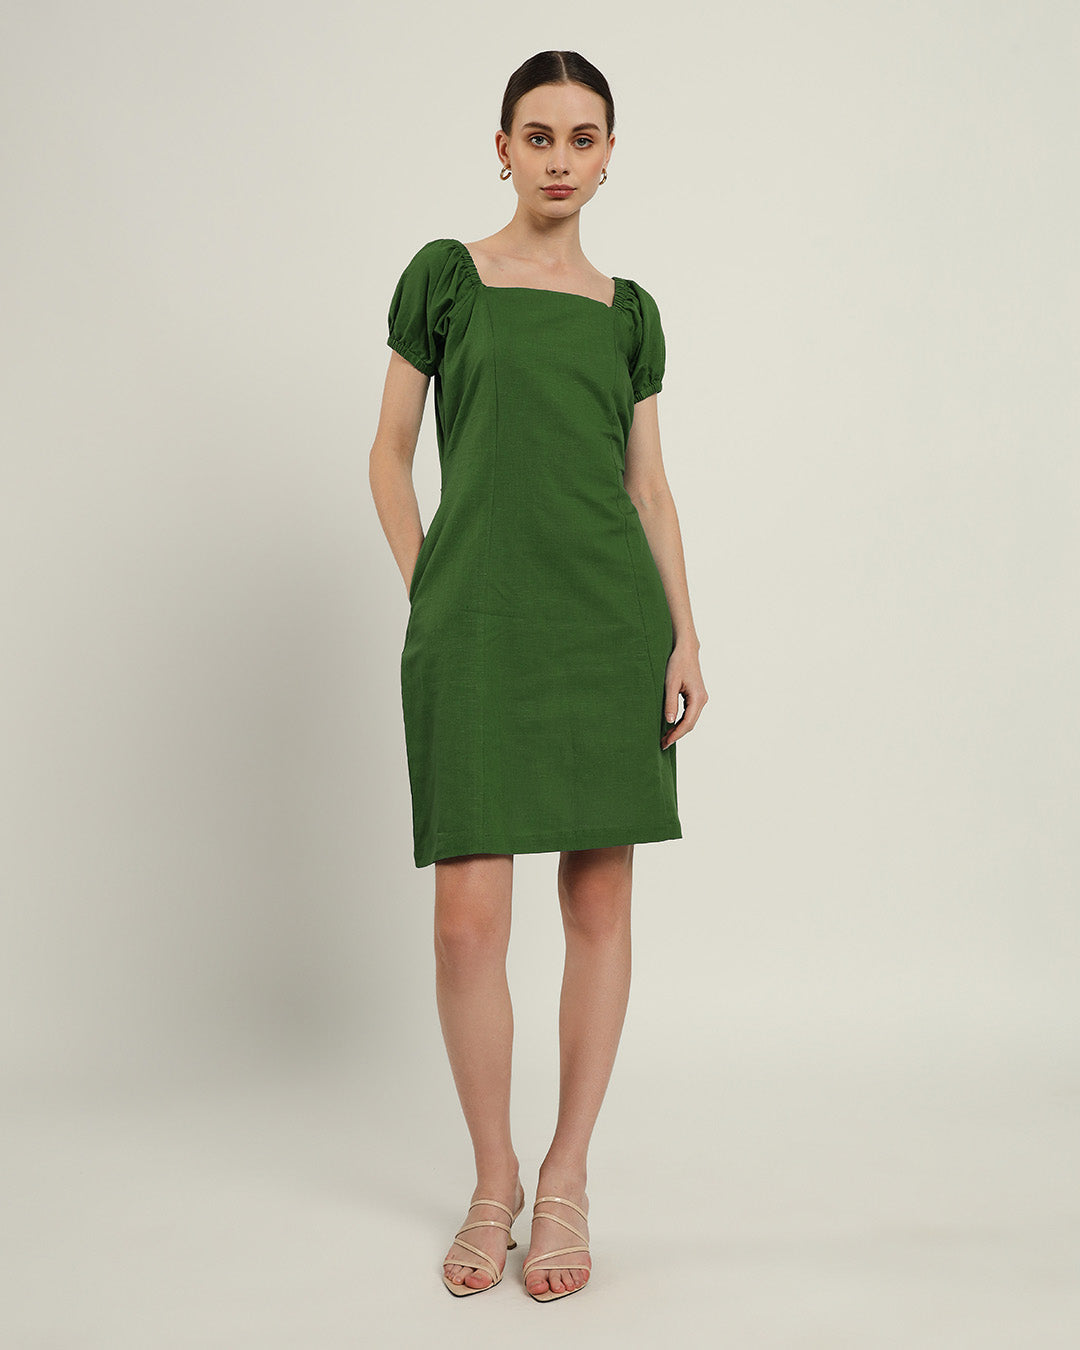 The Arar Emerald Cotton Dress